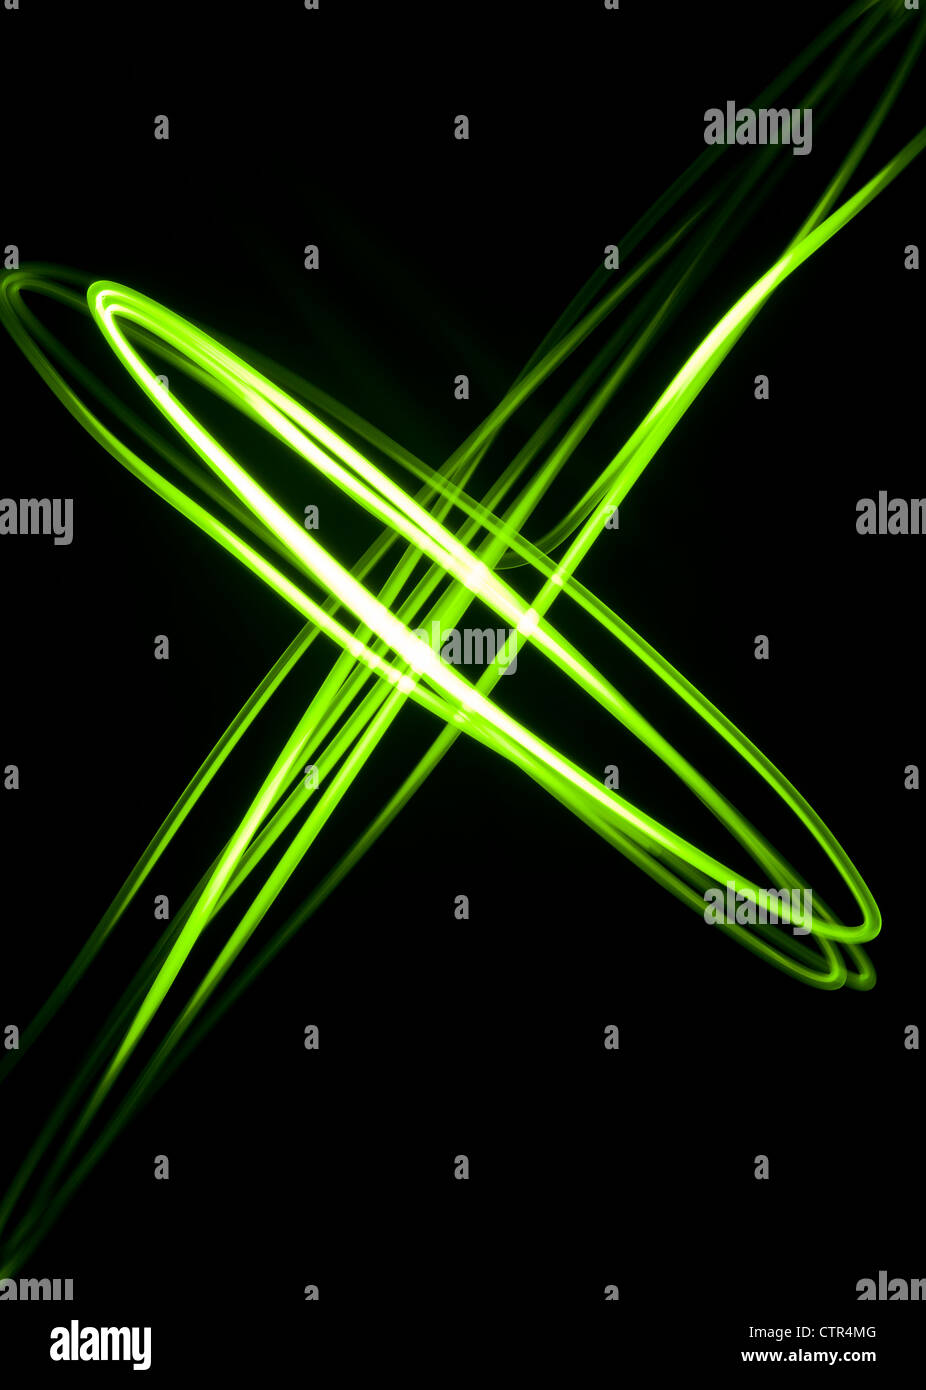 A Green diagonal abstract light physiogram Stock Photo